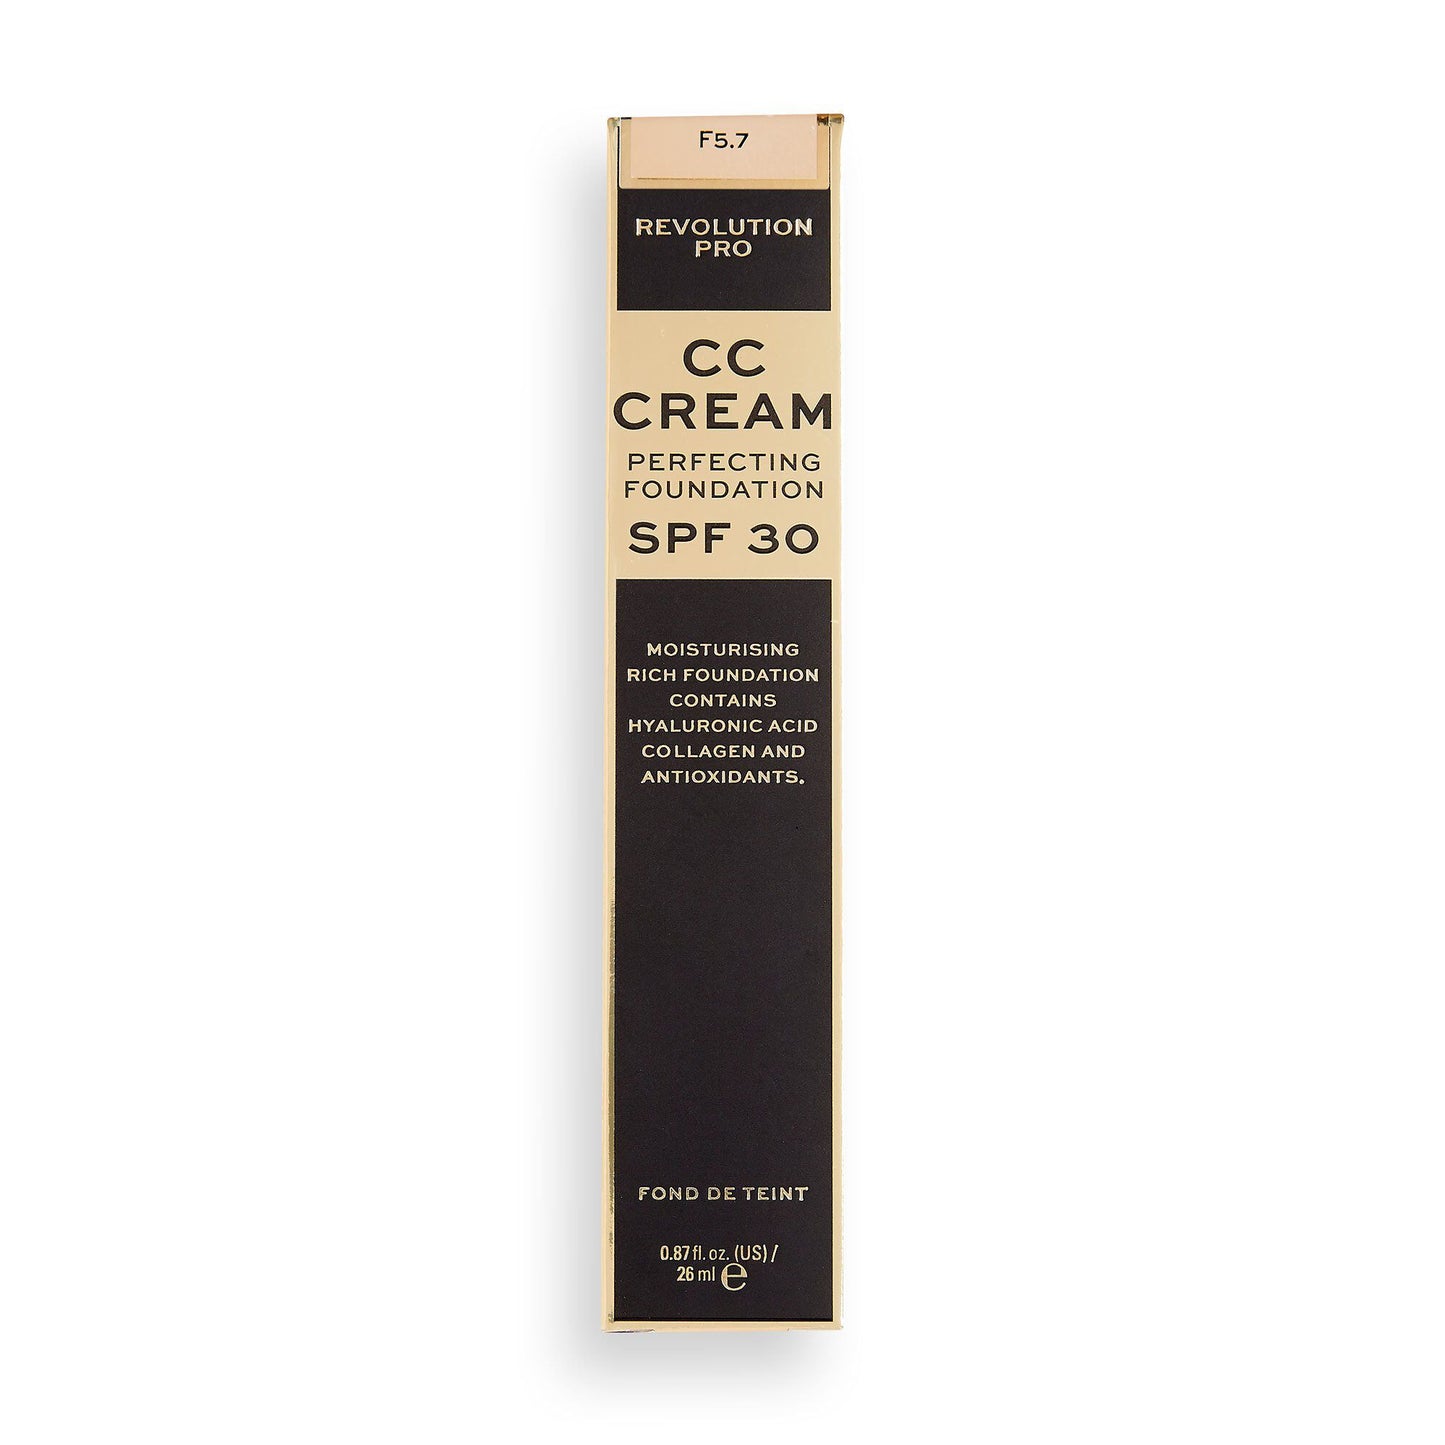 Revolution Pro CC Cream Perfecting Foundation SPF30 F5.7